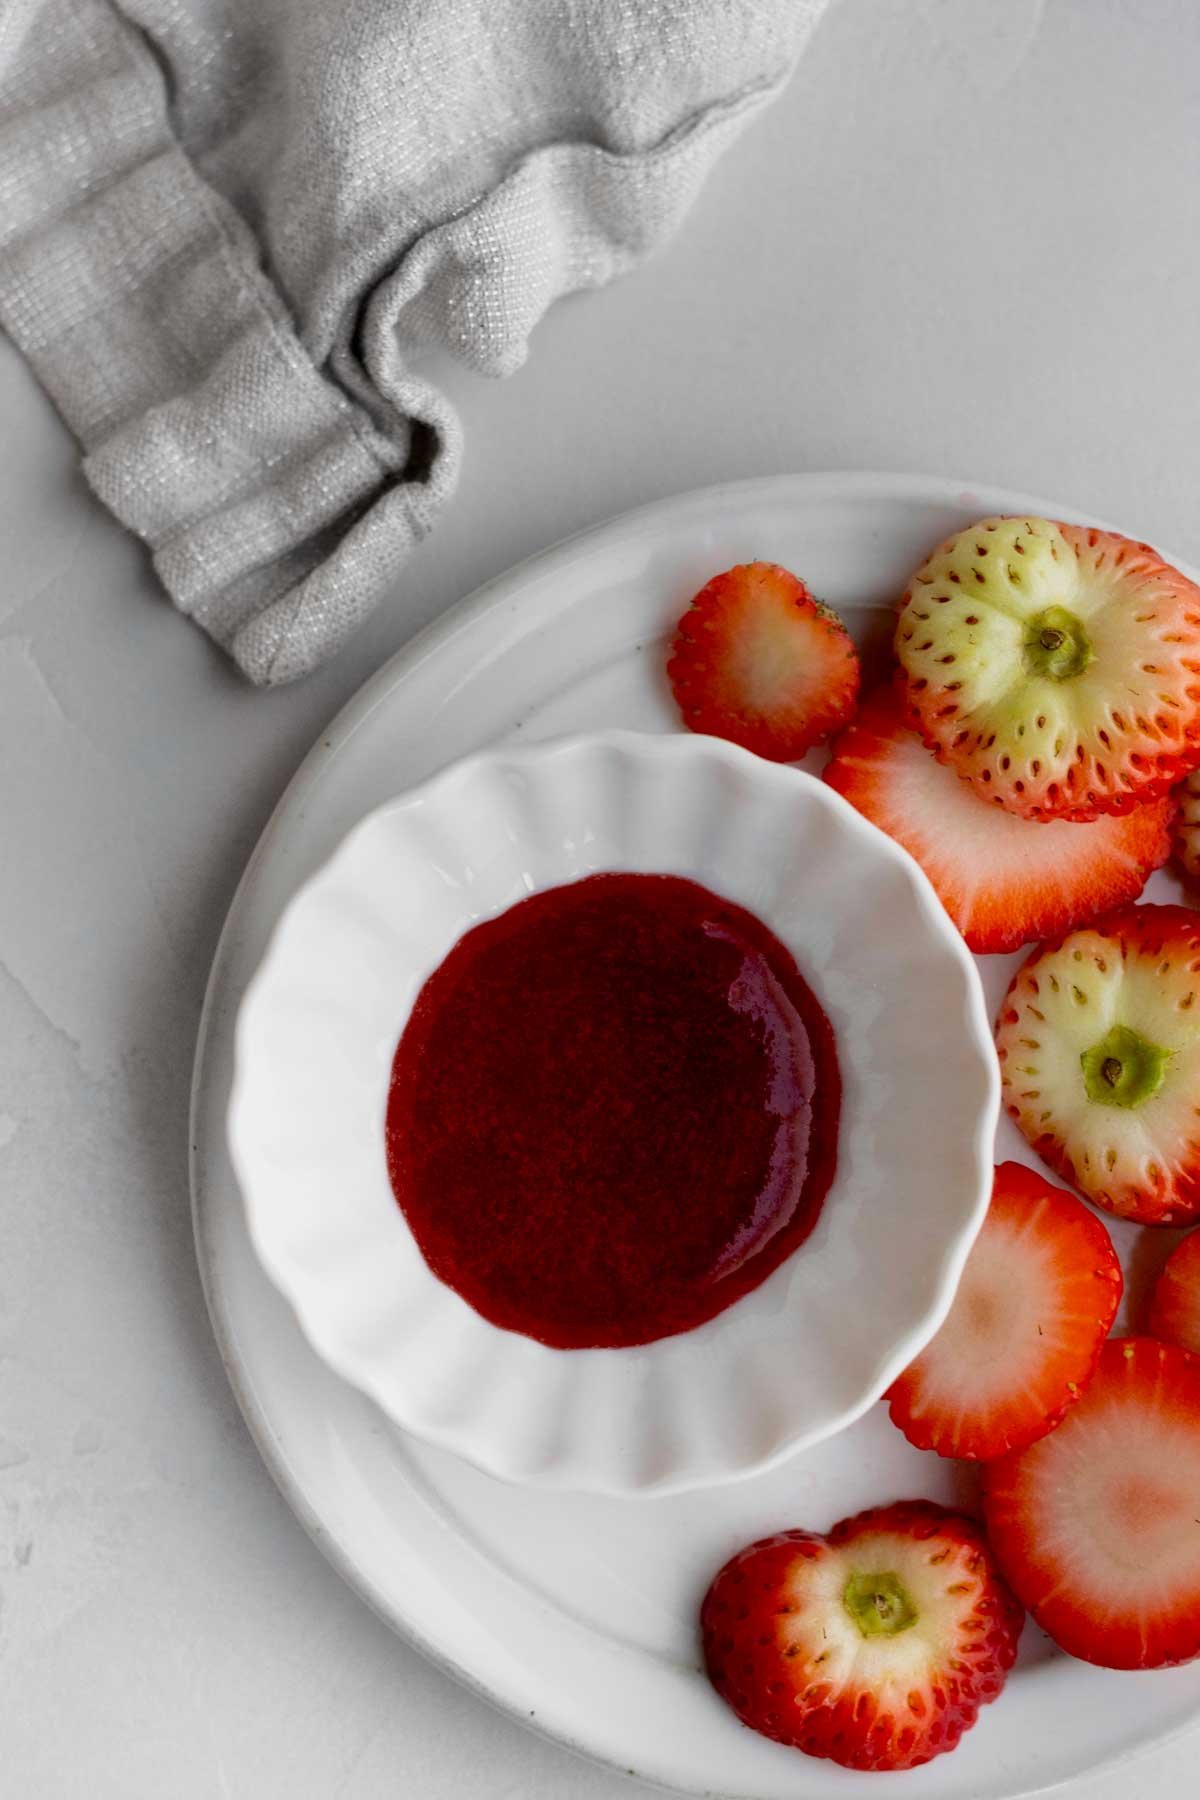 Strawberry liquid in a ramekin on a plate of cut strawberry tops.